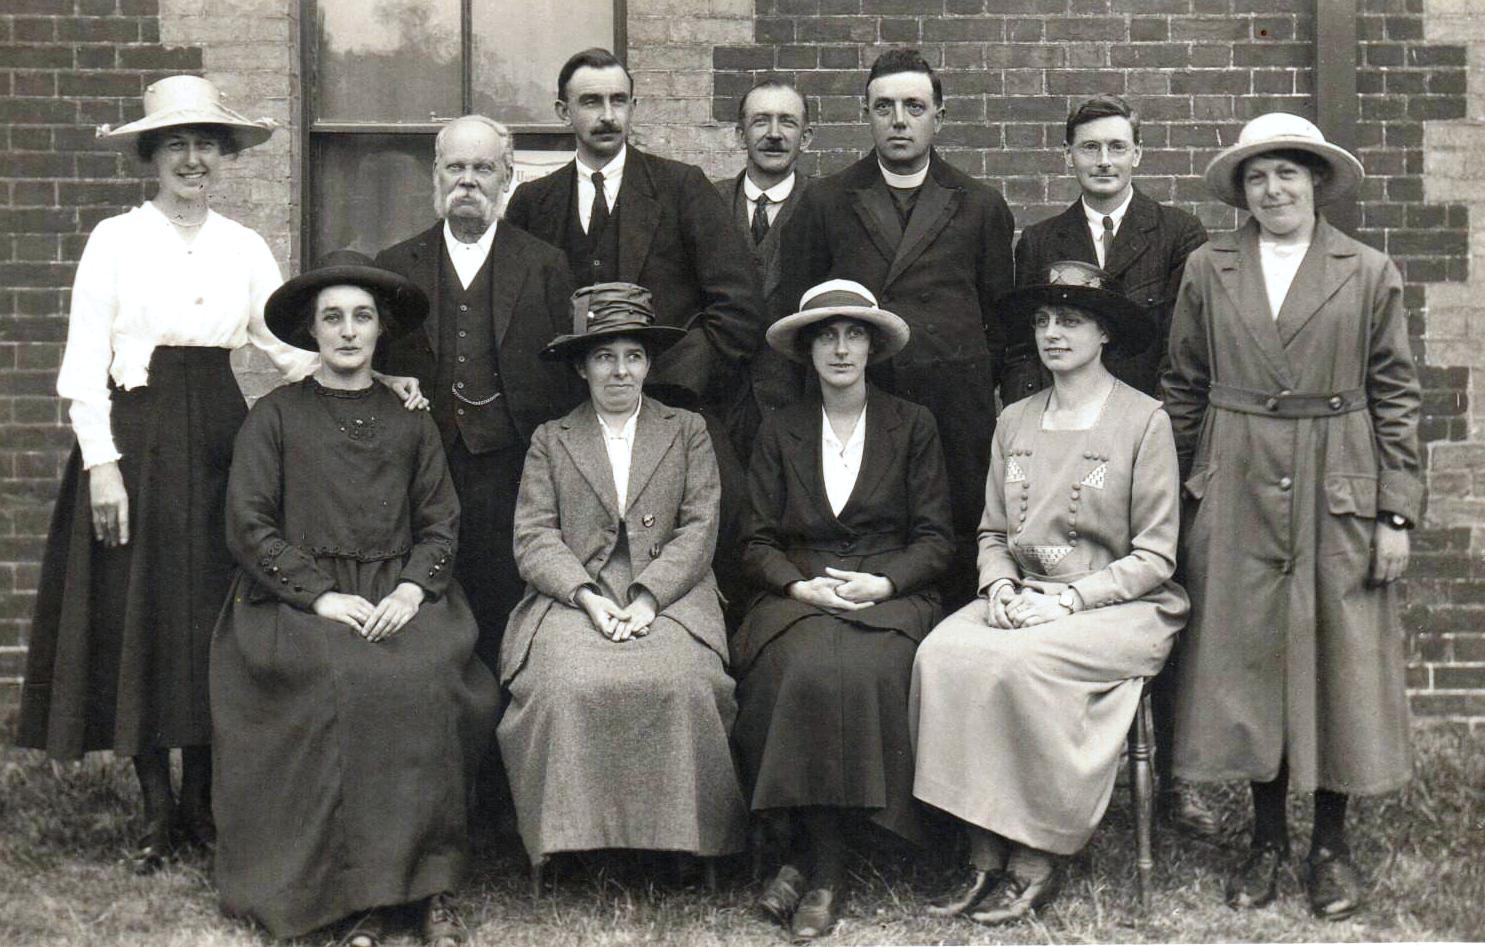 Methodists'group photo